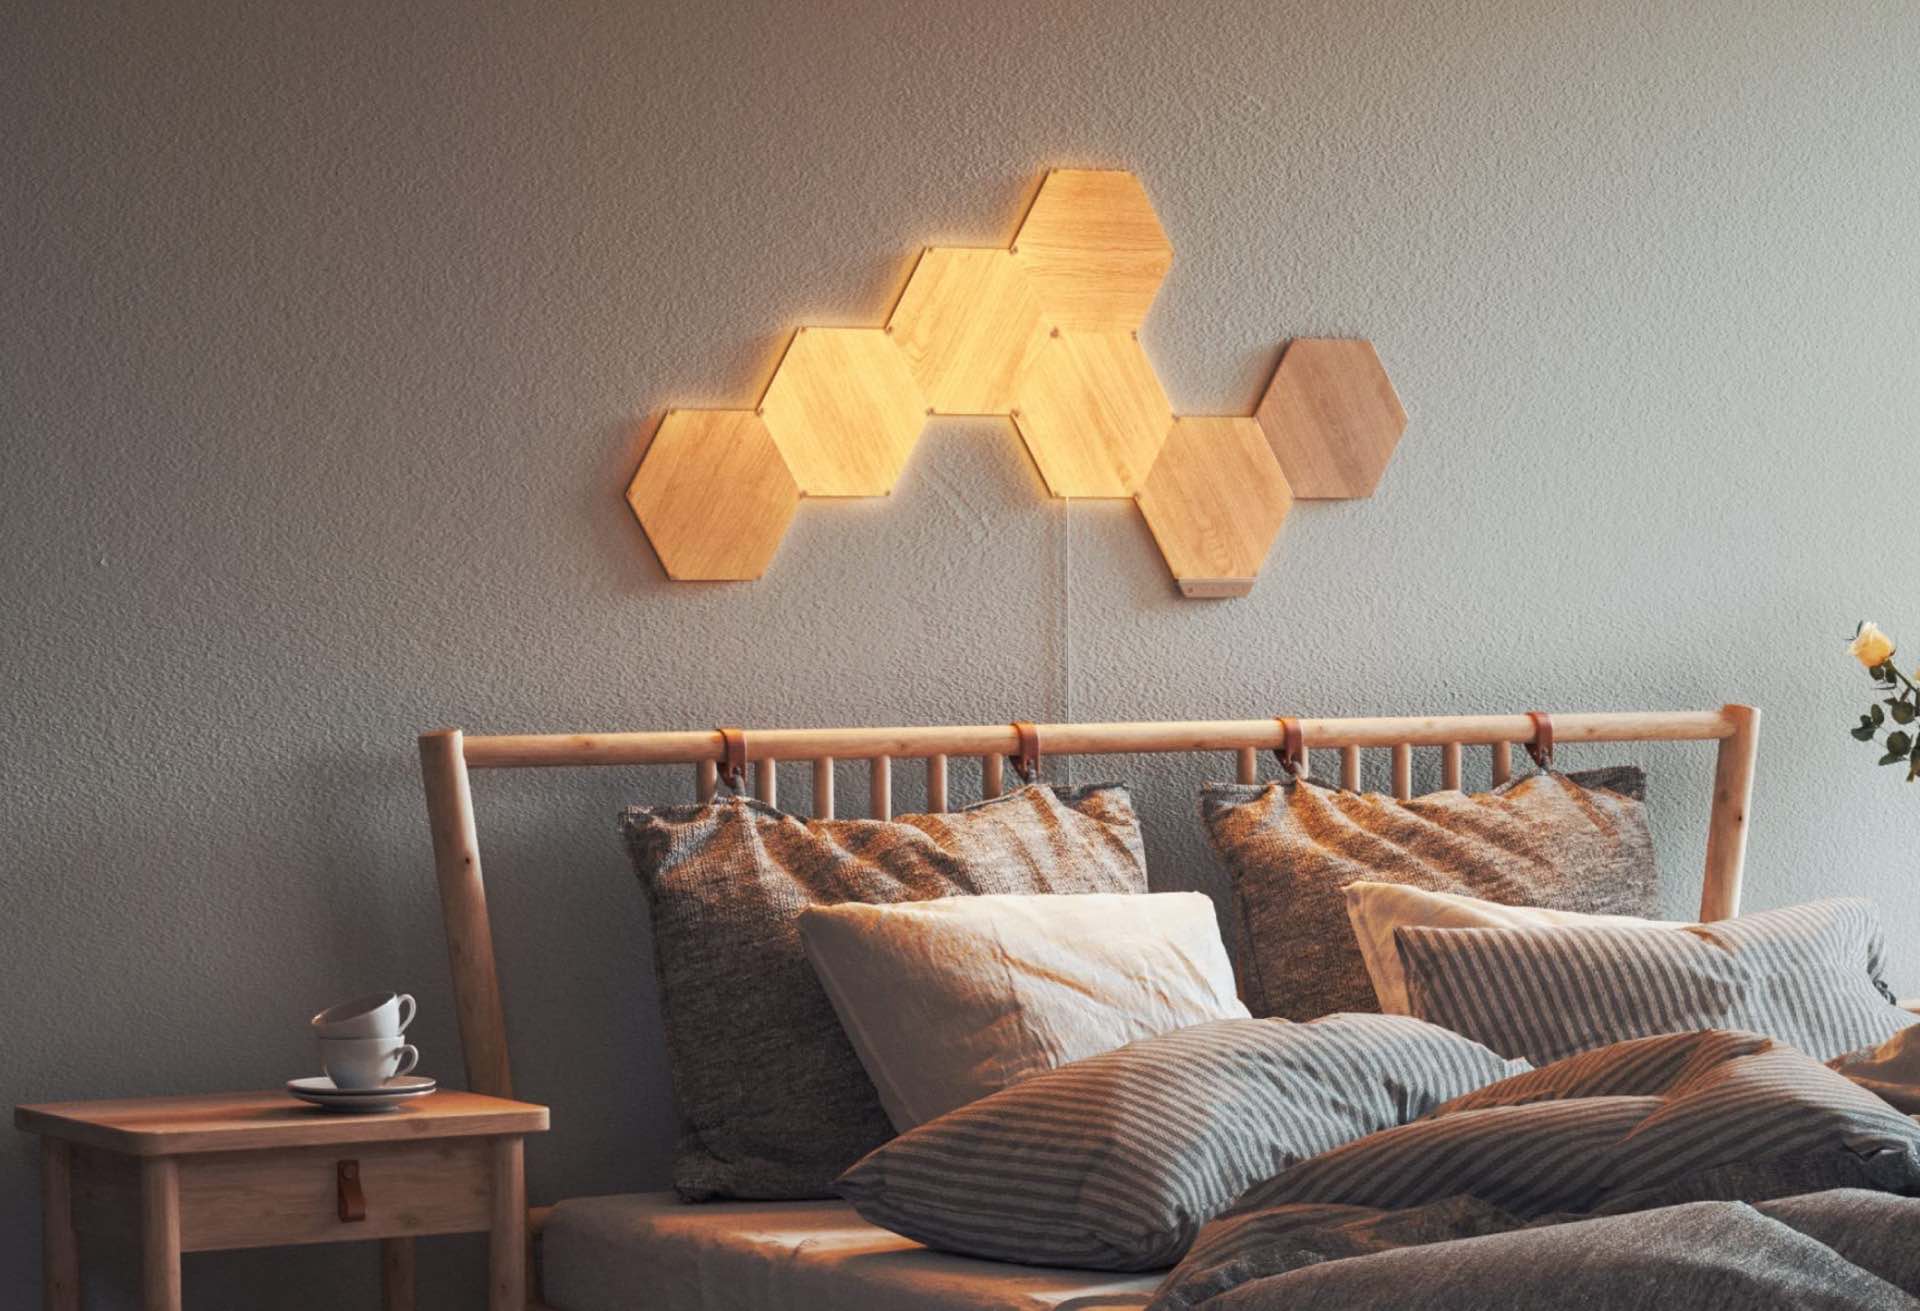 nanoleaf-elements-wood-look-smart-light-panels